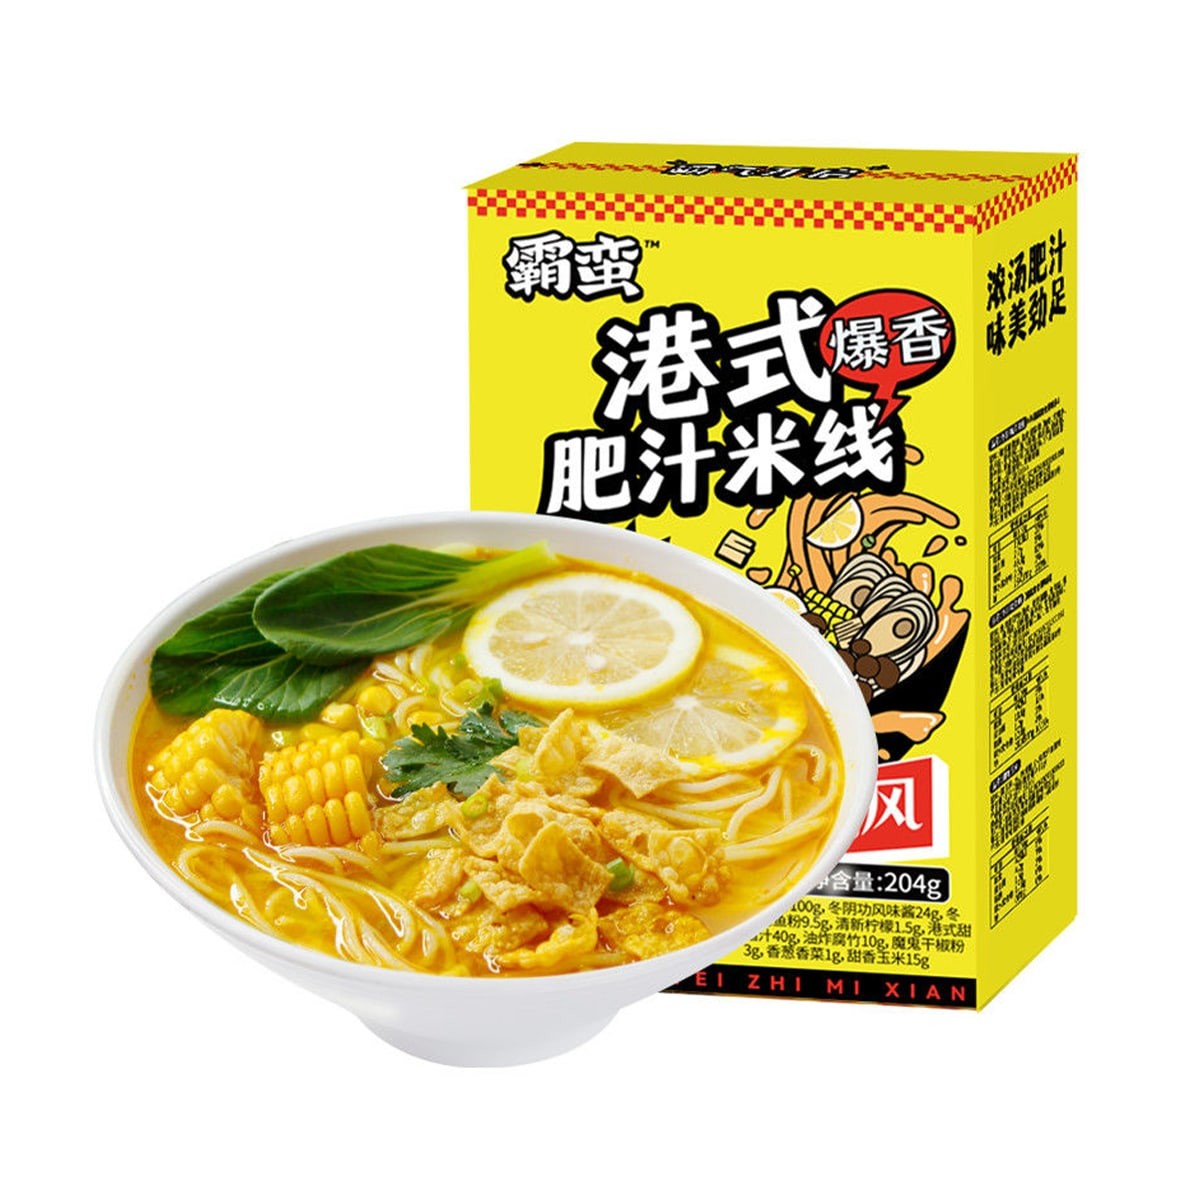 rice-noodles-tom-yum-goong-soup-flavor